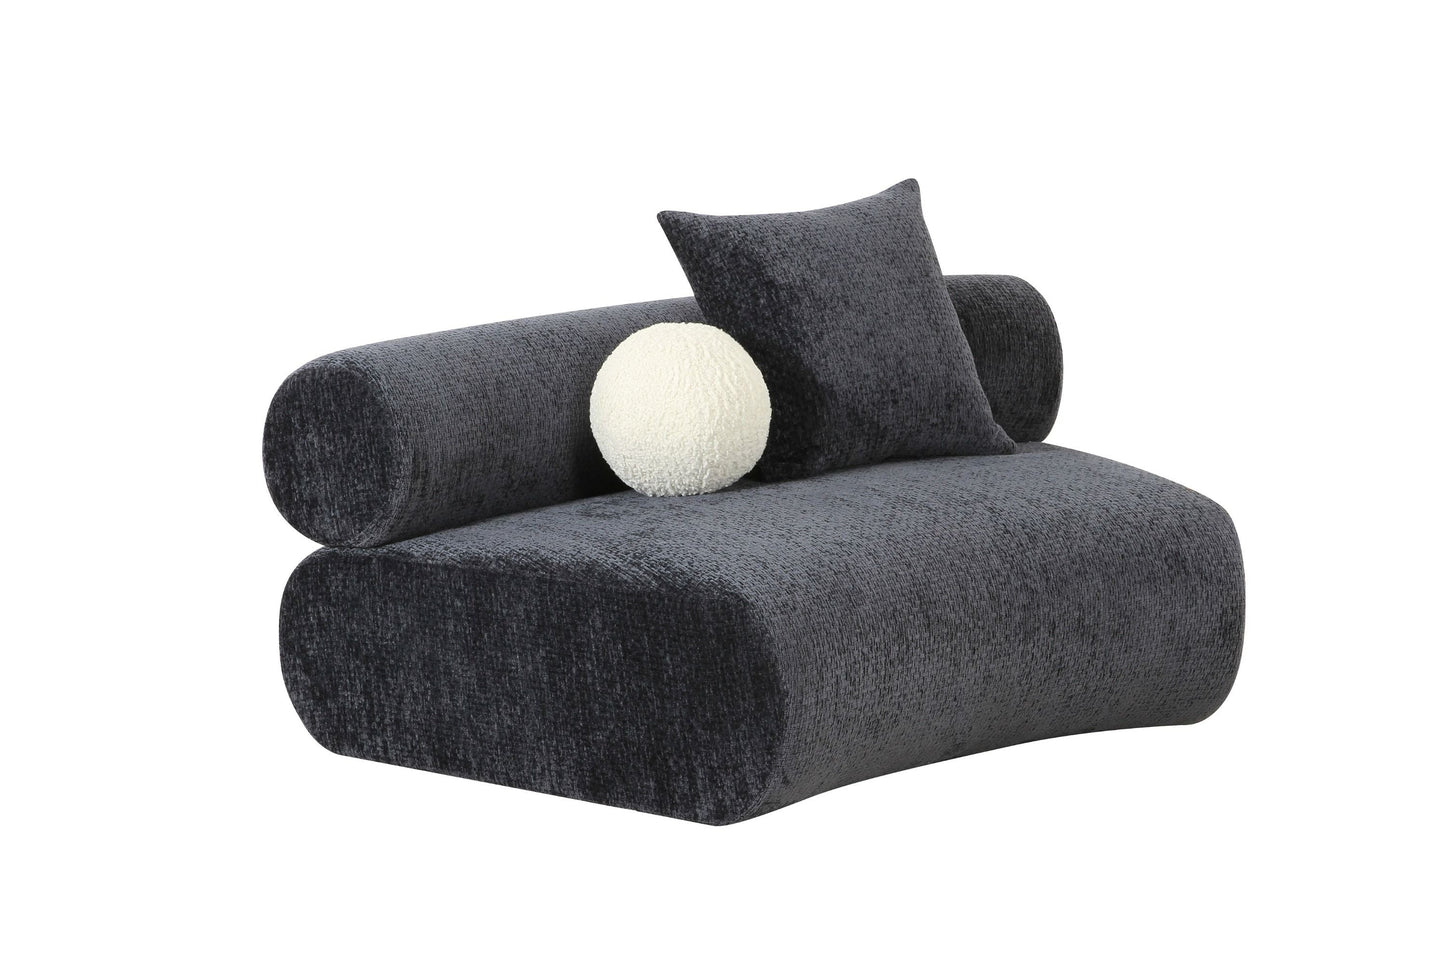 Divani Casa Simpson - Contemporary Dark Grey Fabric Curved Modular Armless Seat with Throw Pillows